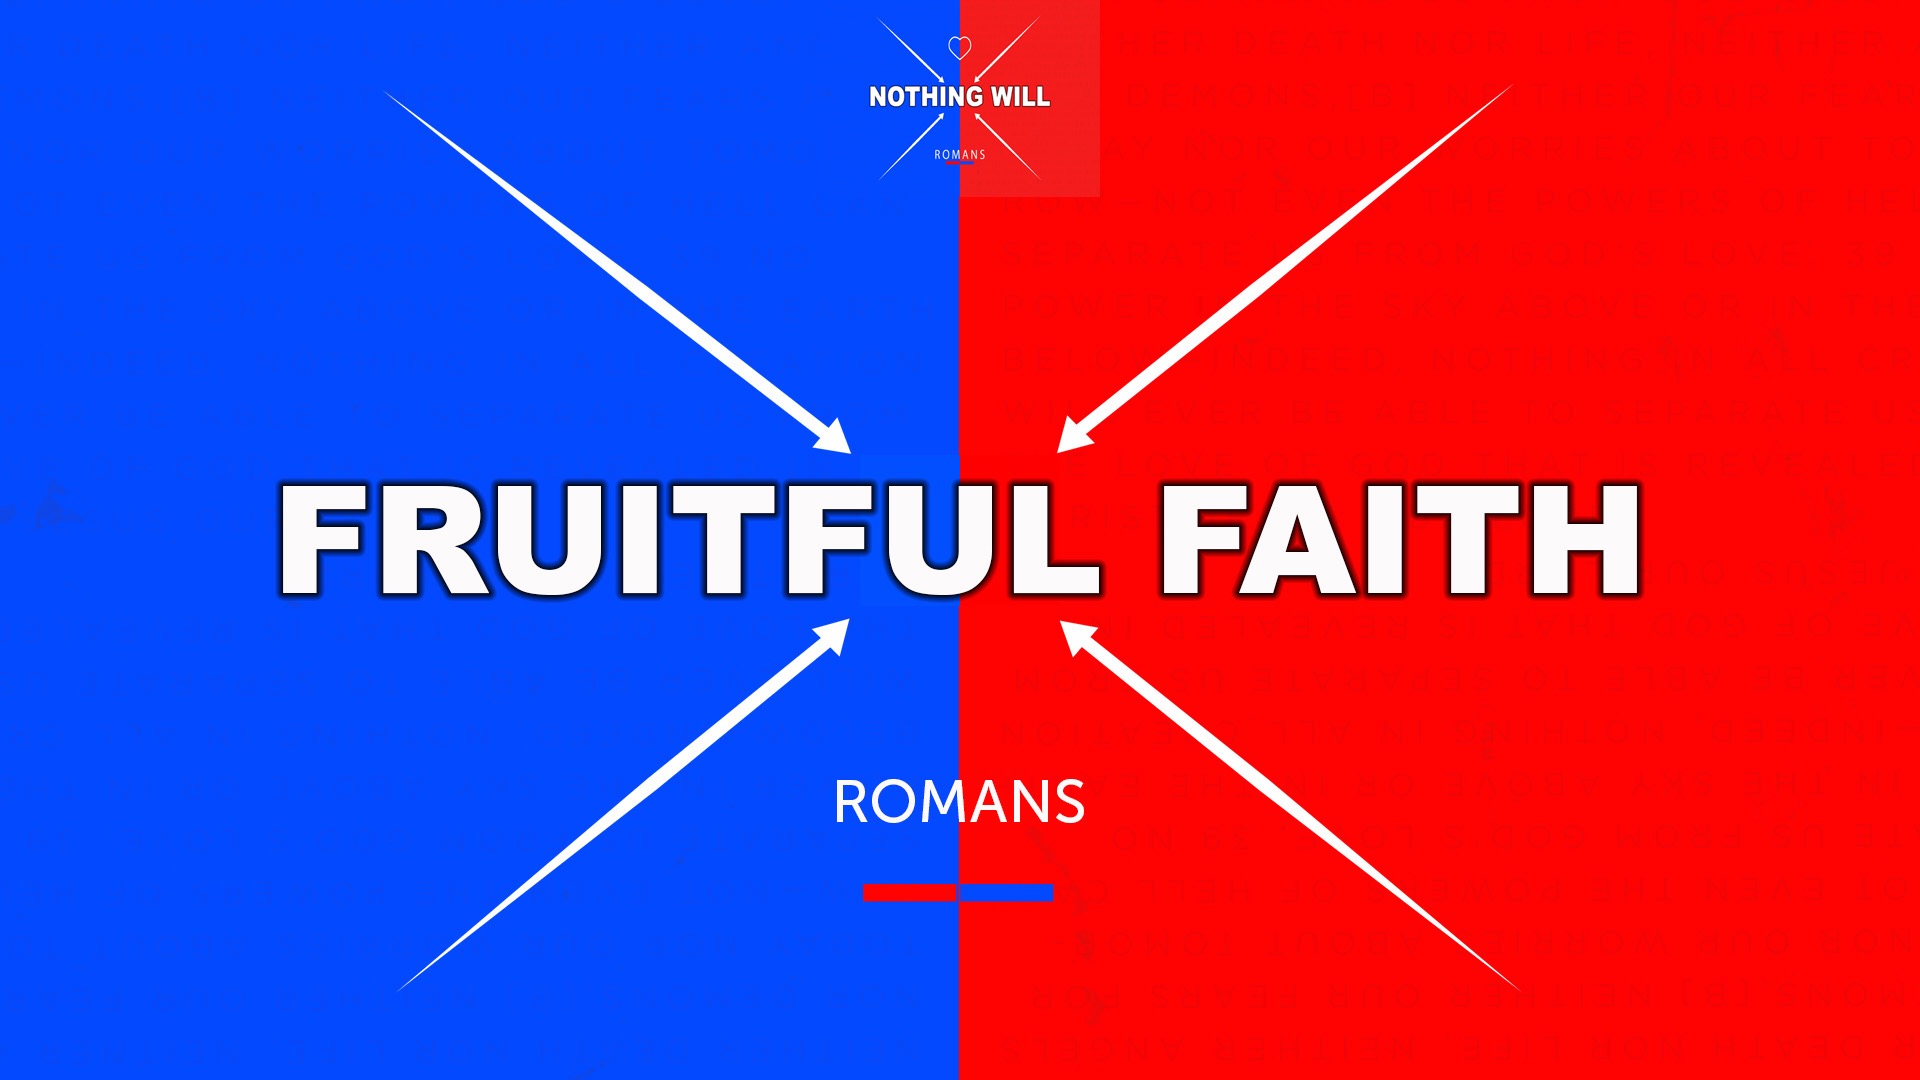 Pastor Huey: Romans | Nothing Will | Fruitful Faith (02/28/16)